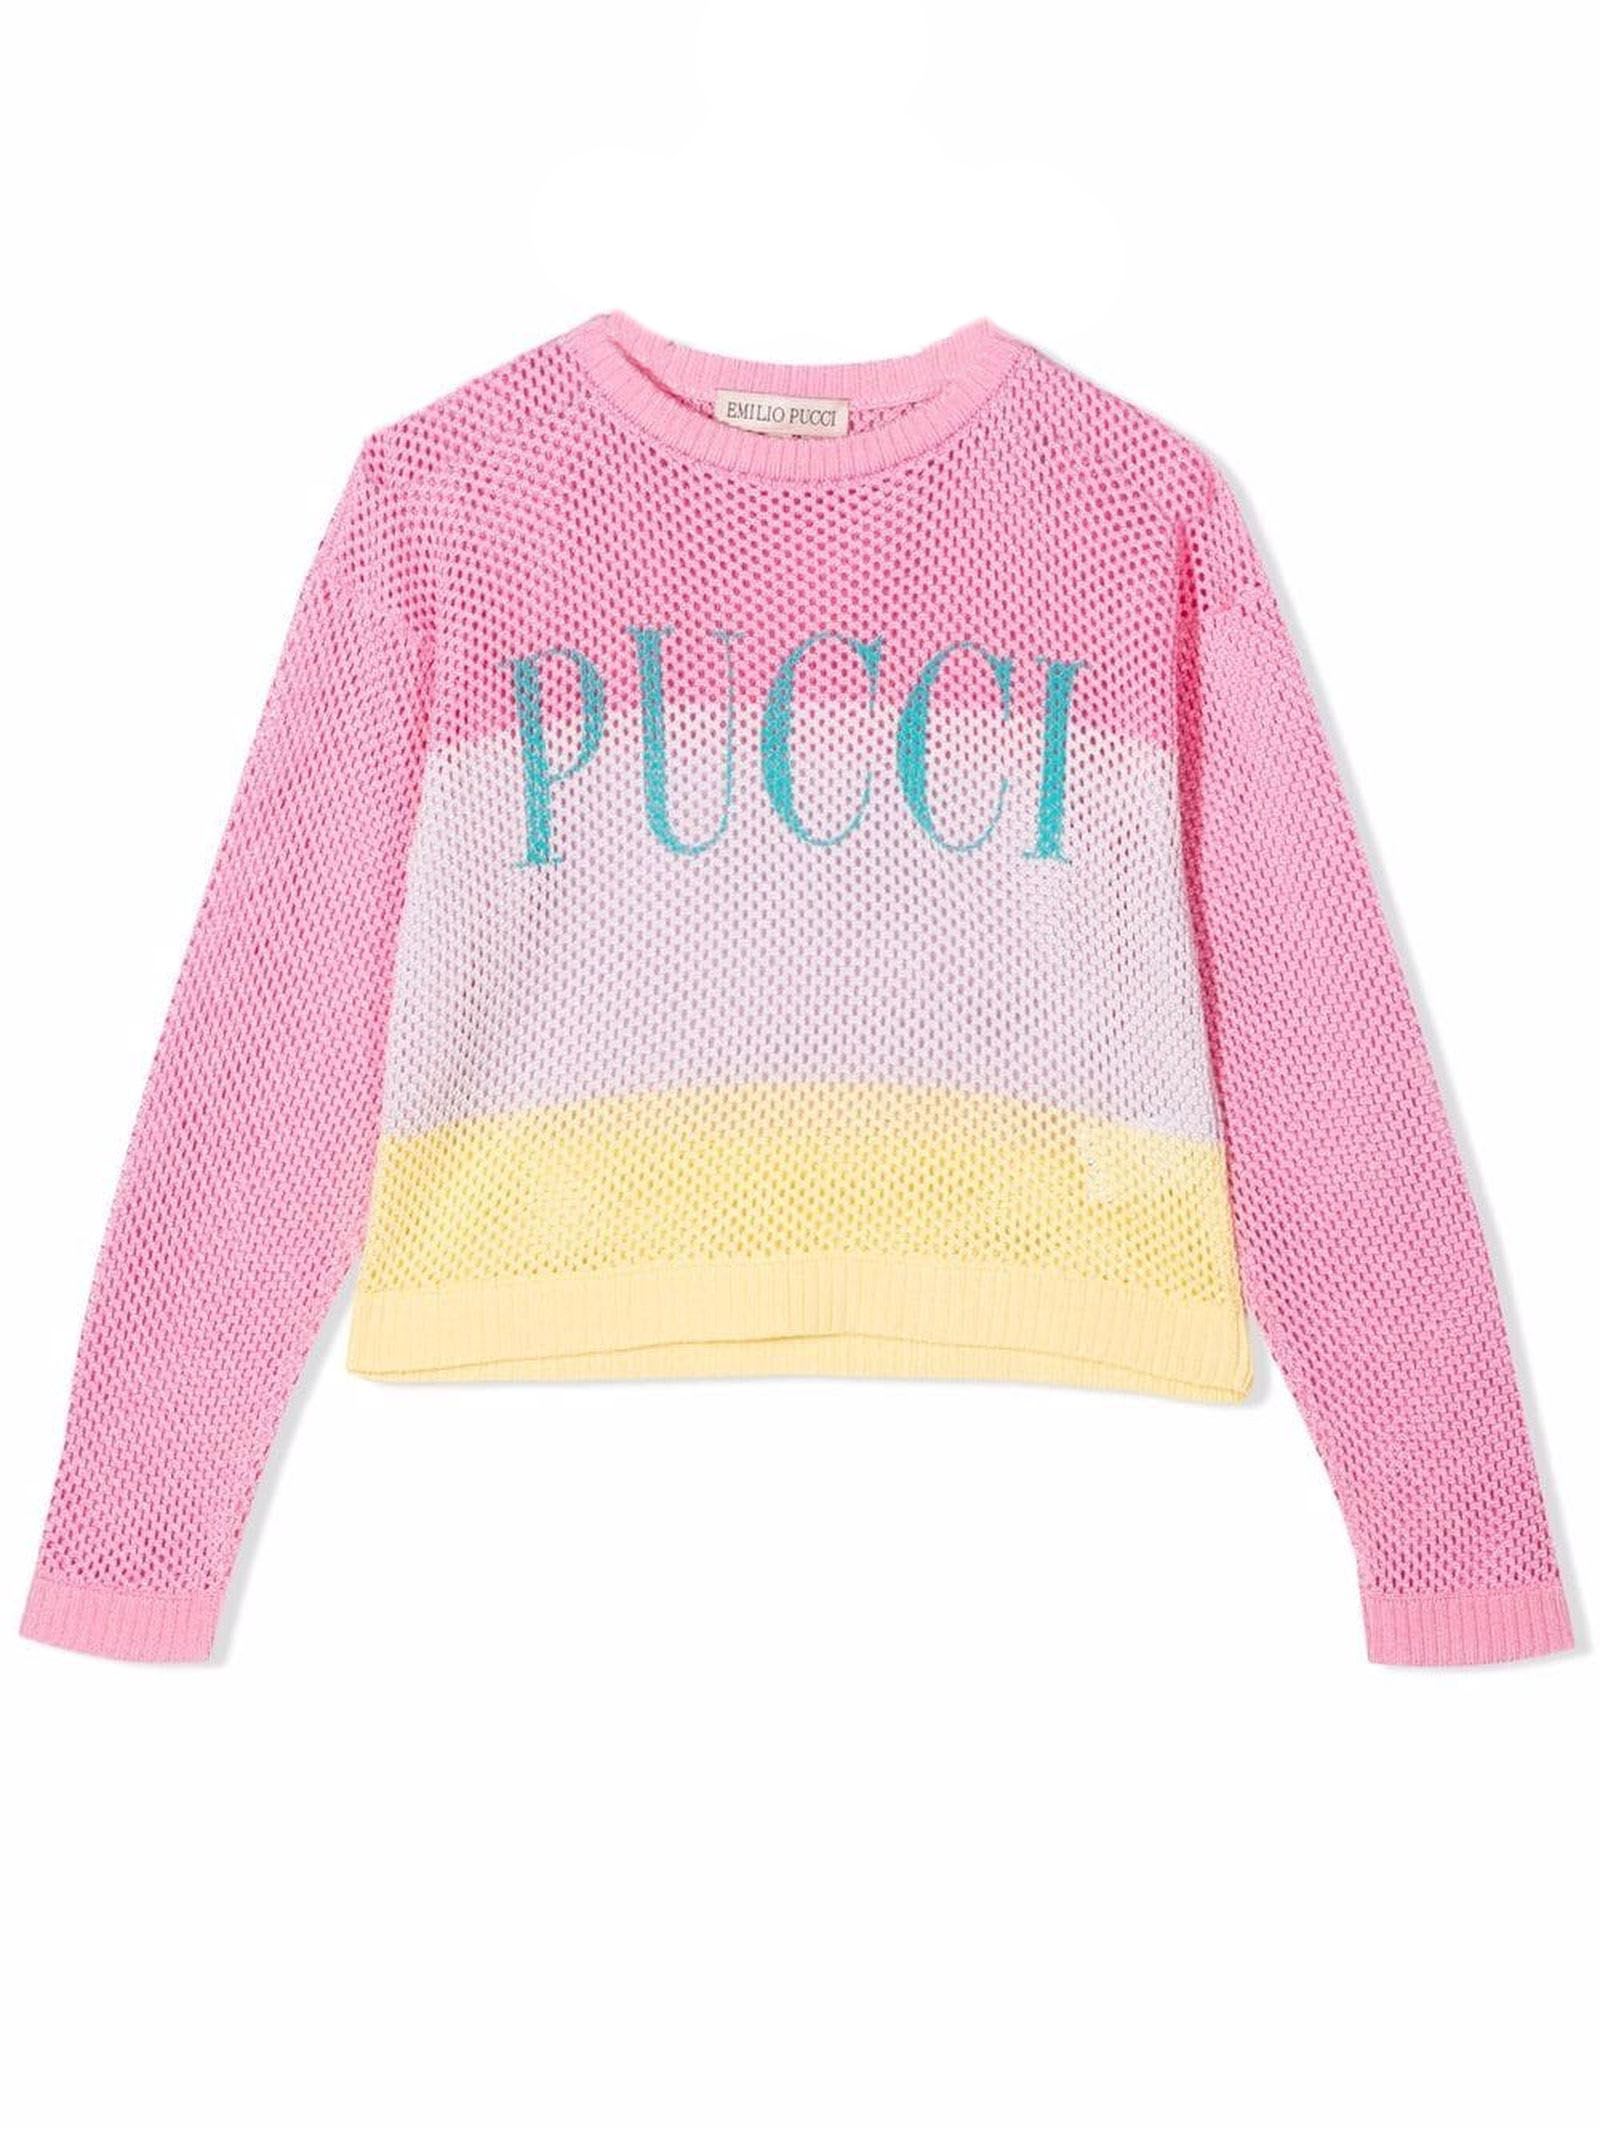 Emilio Pucci Pink Cotton Tshirt